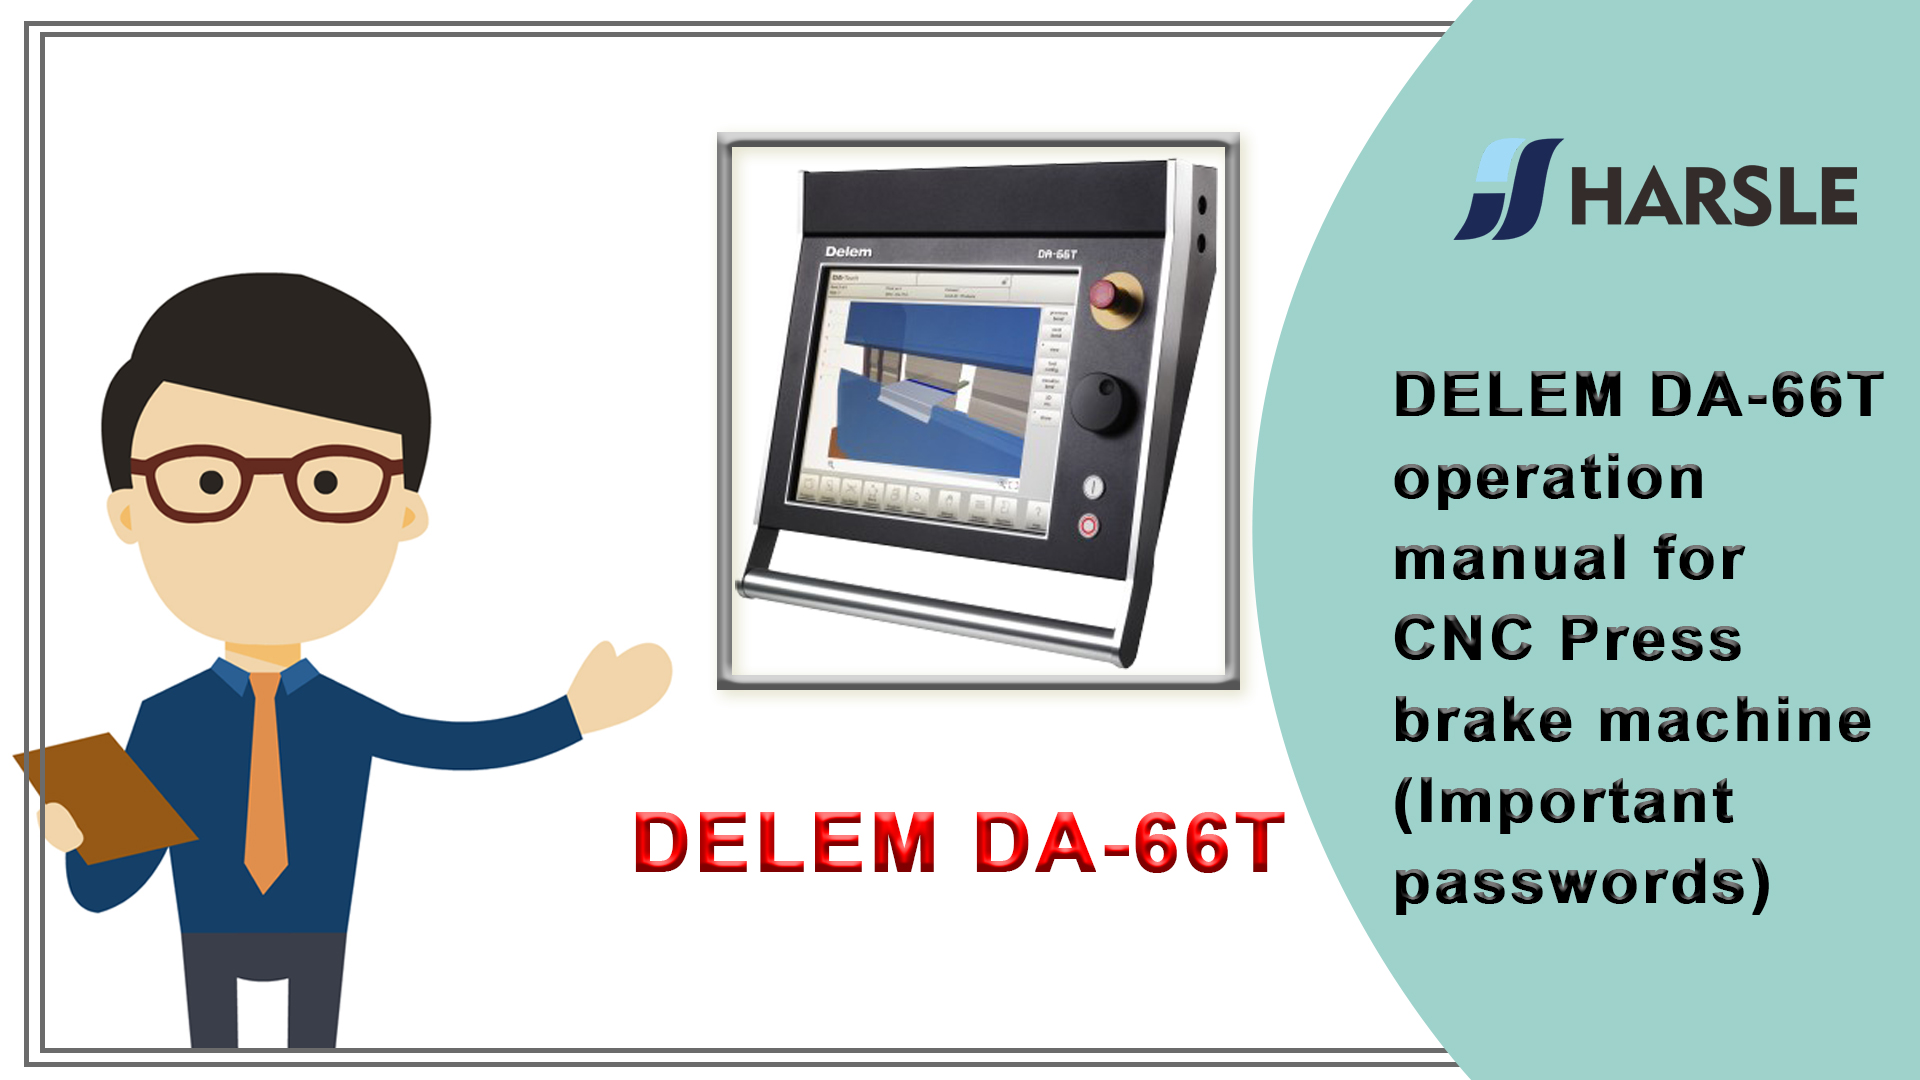 Manual de operación DELEM DA-66T para máquina plegadora CNC (contraseñas importantes)